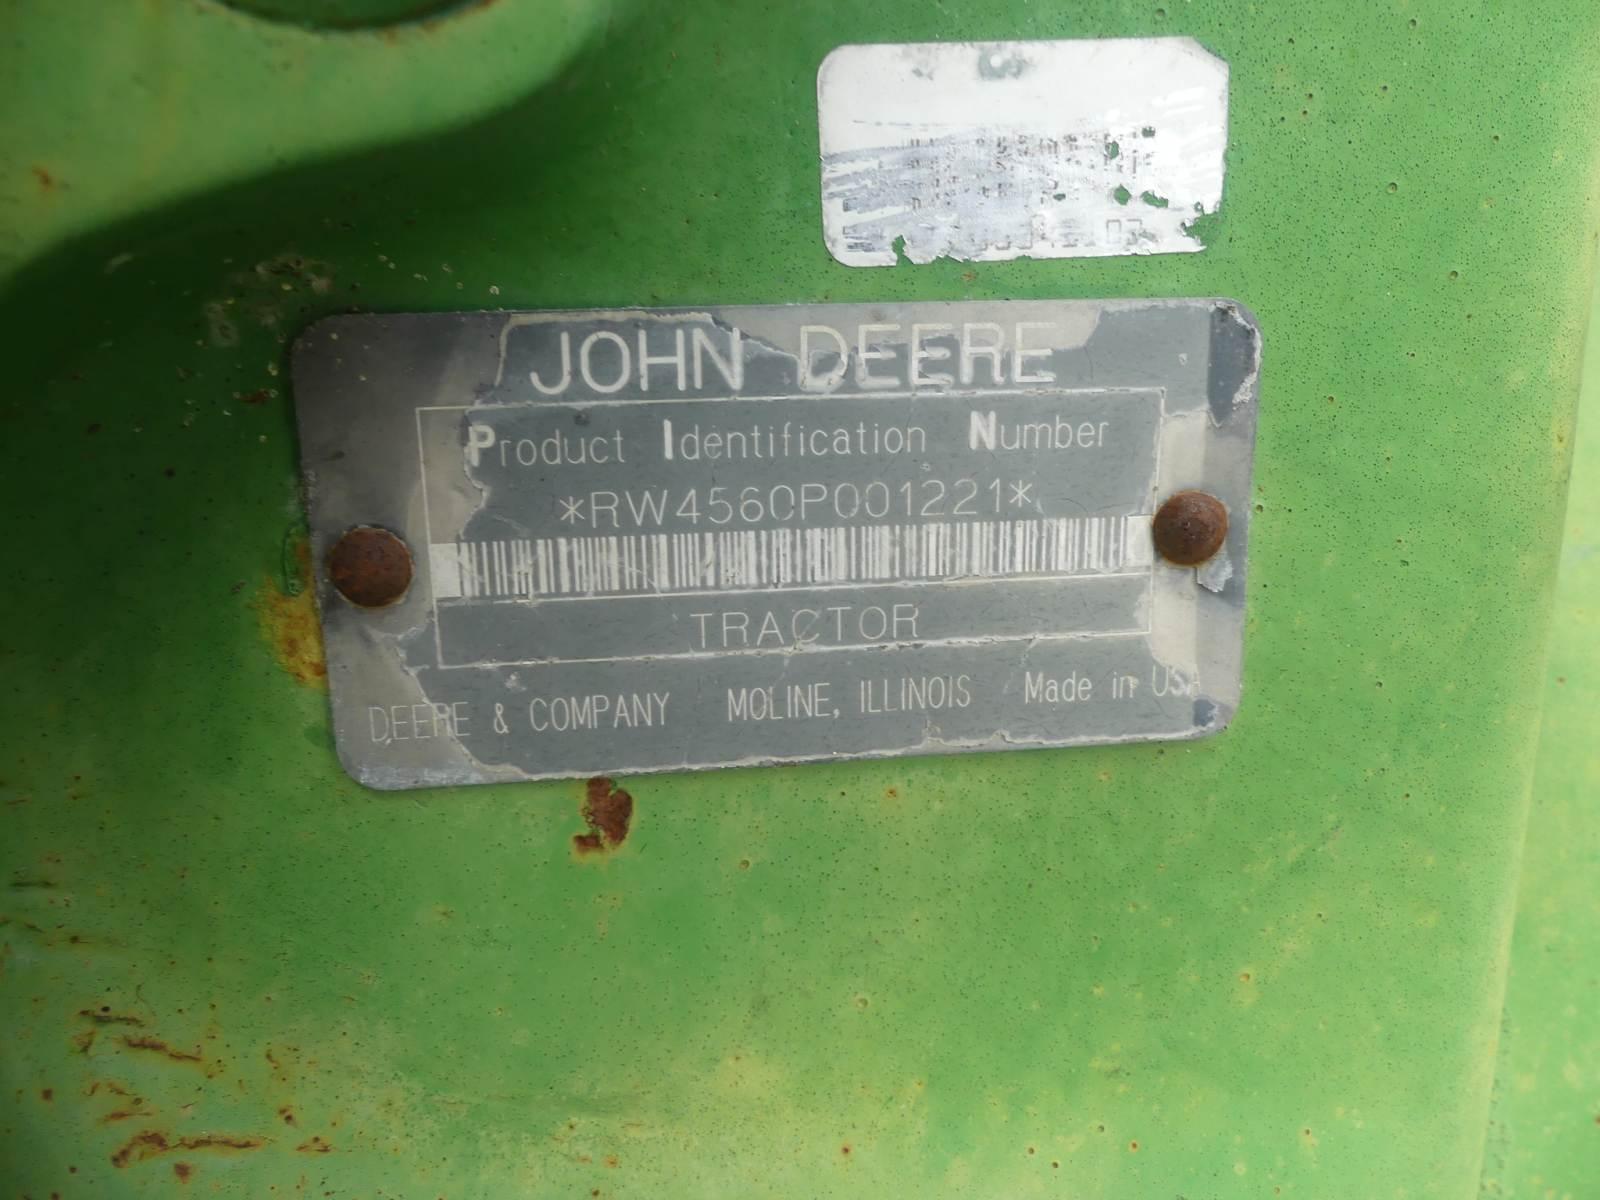 John Deere 4560 MFWD Tractor, s/n RW4560P001221 (Salvage): C/A, Heat, Diese